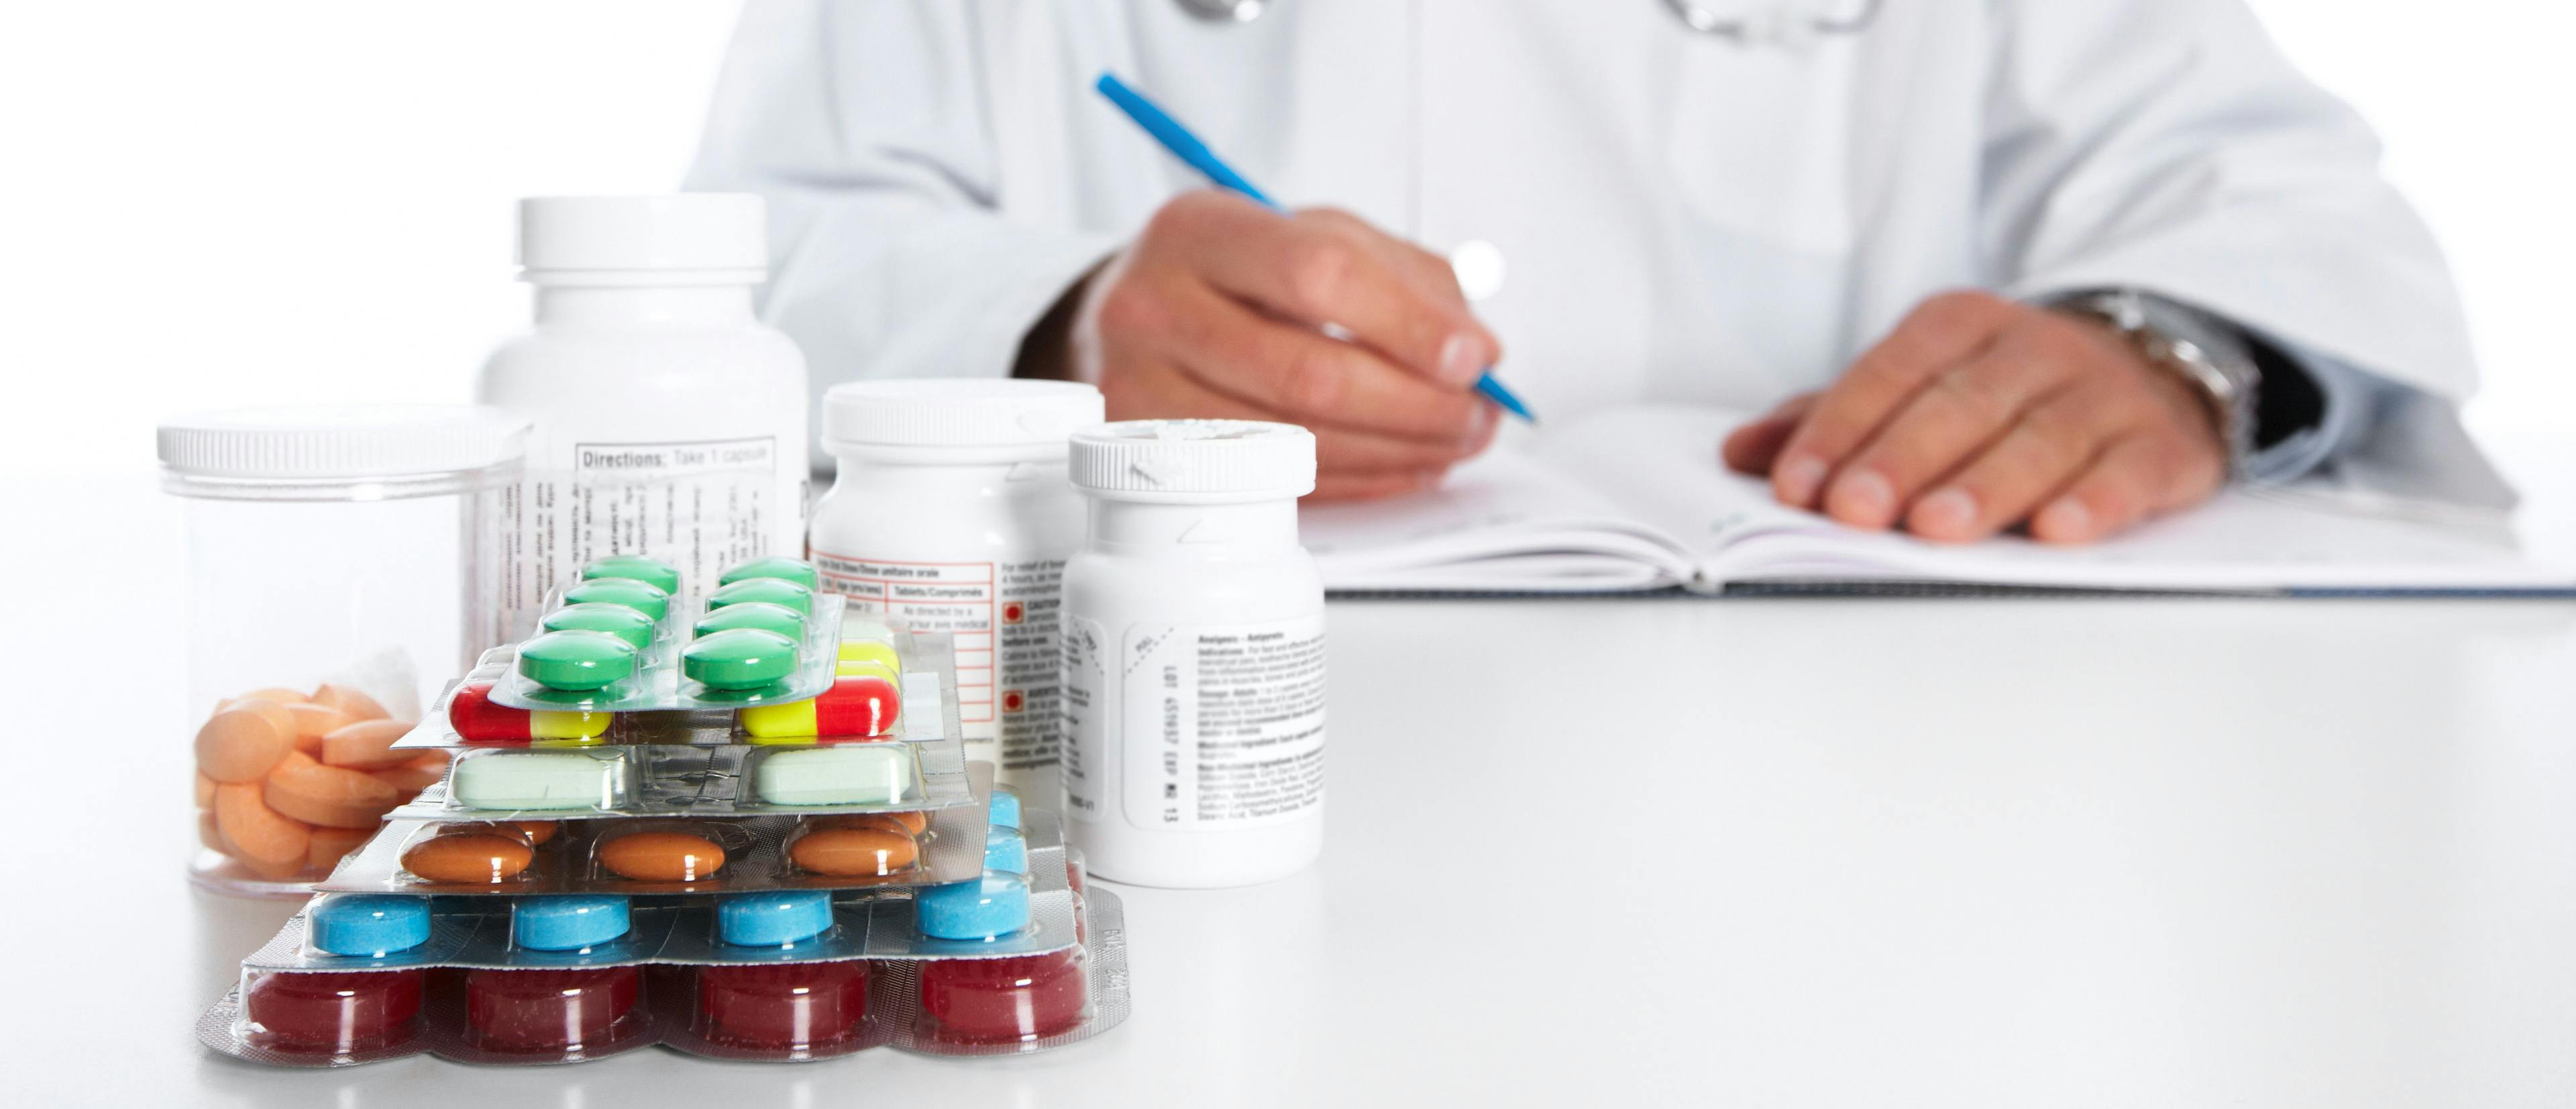 Alarming Amount of Antibiotic Prescriptions Are Inappropriate